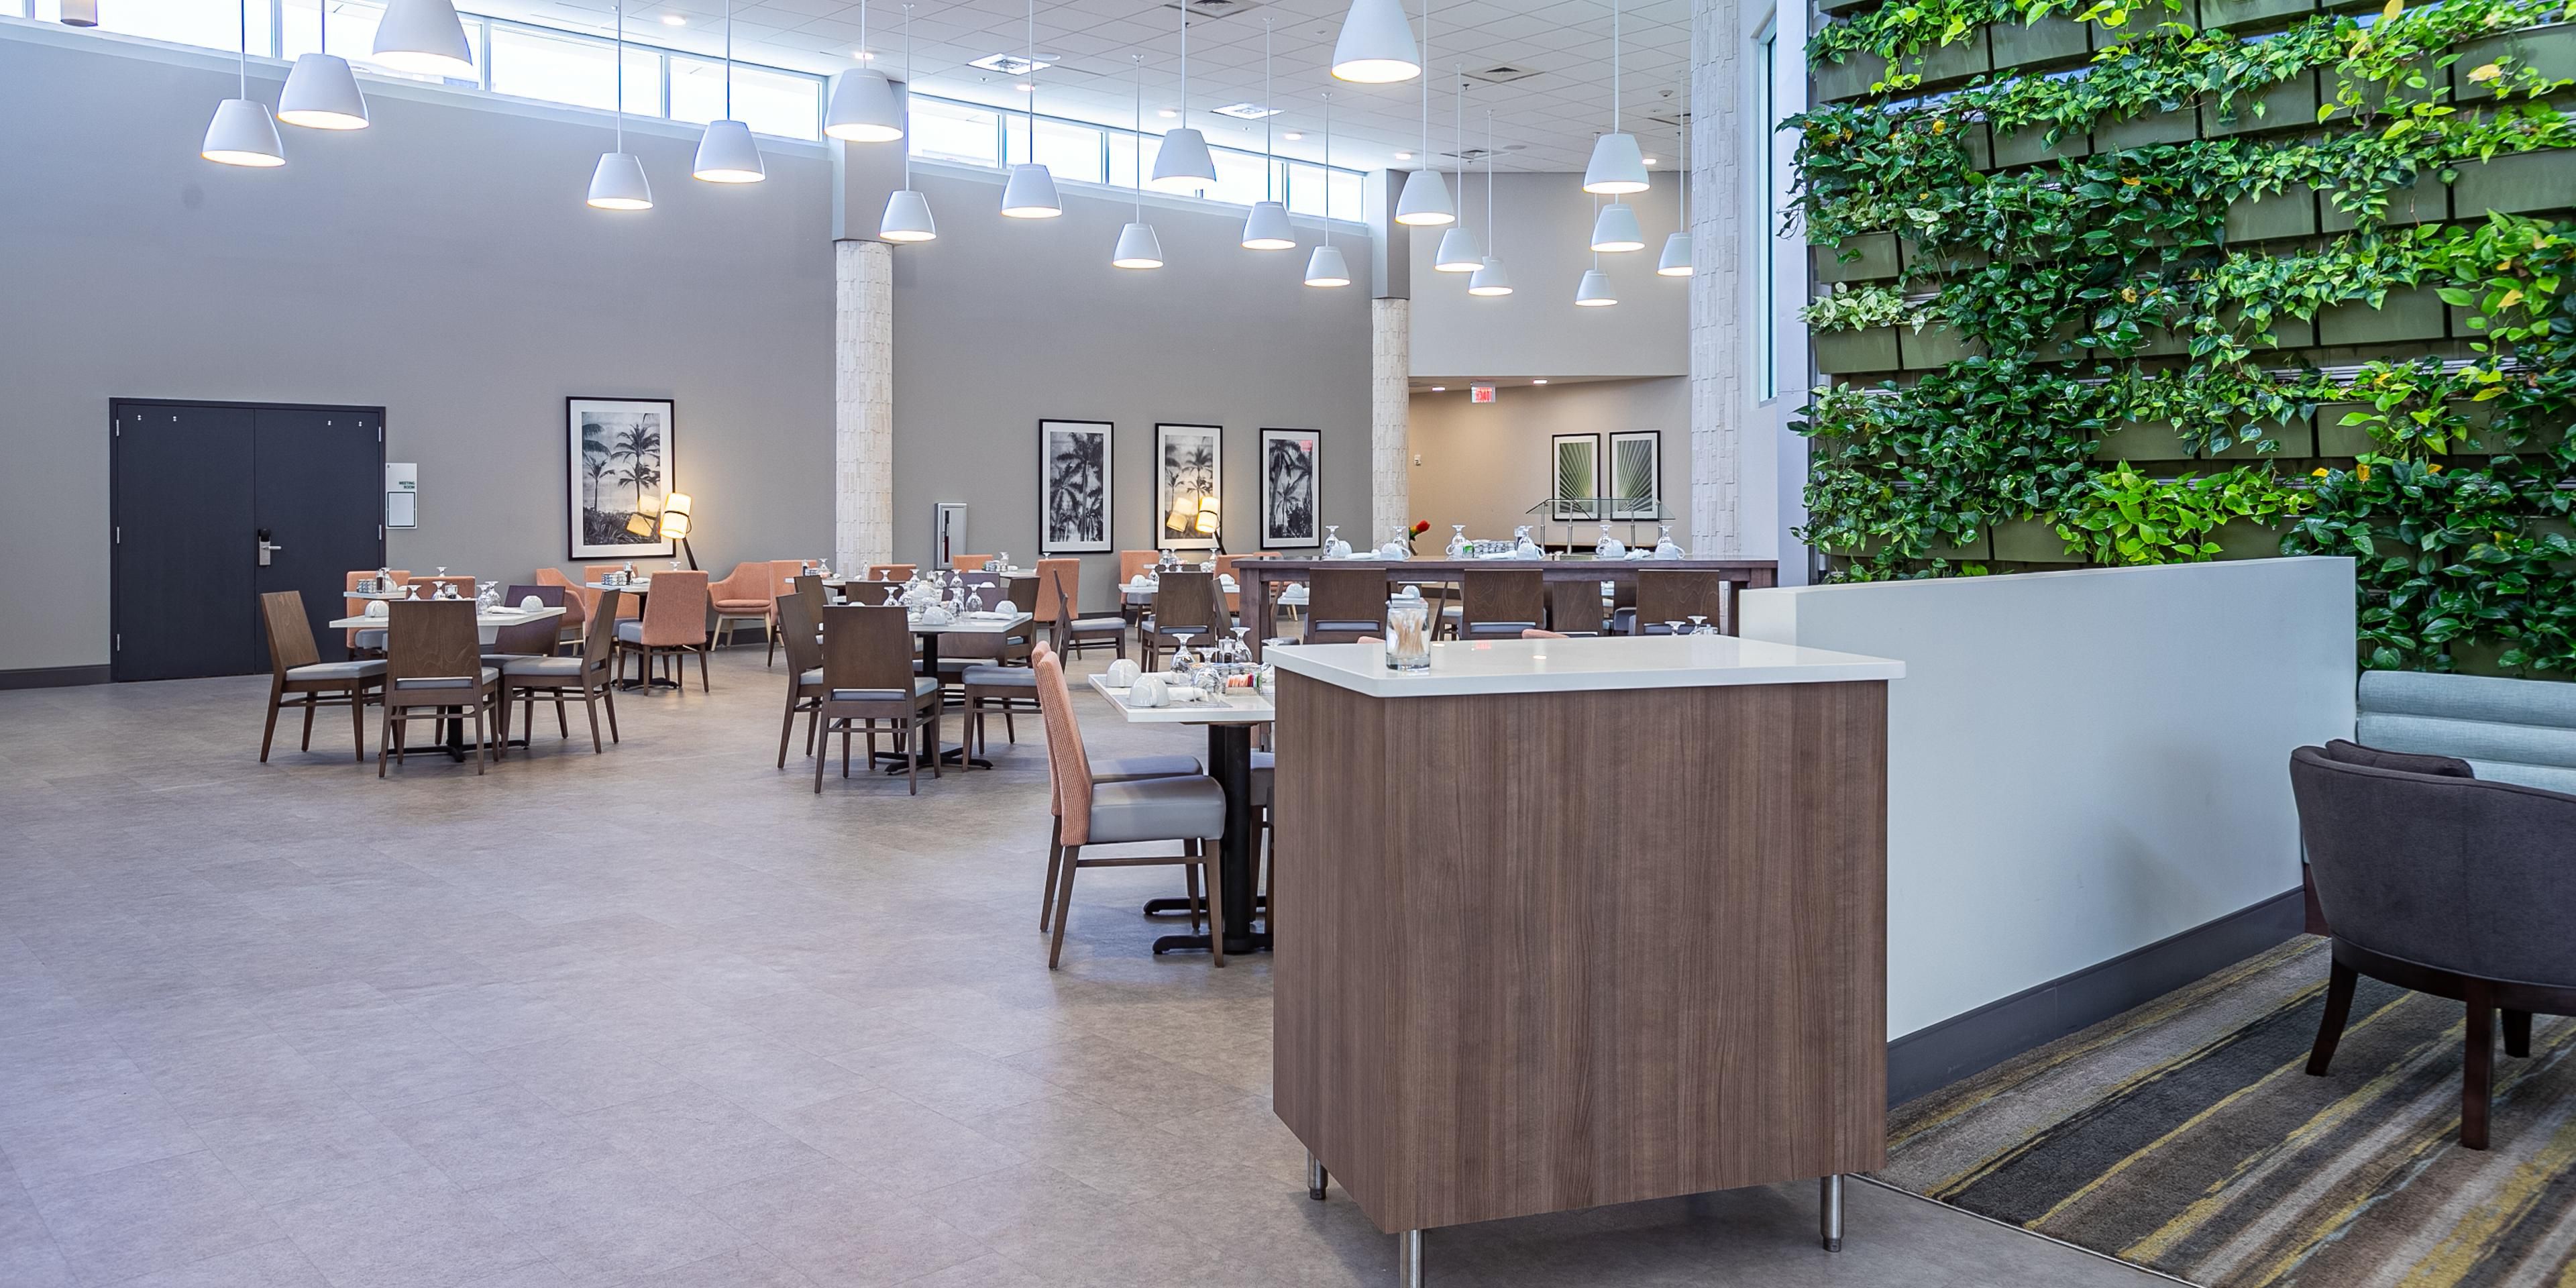 Bellini Cafe located on lobby level open for Breakfast & Dinner